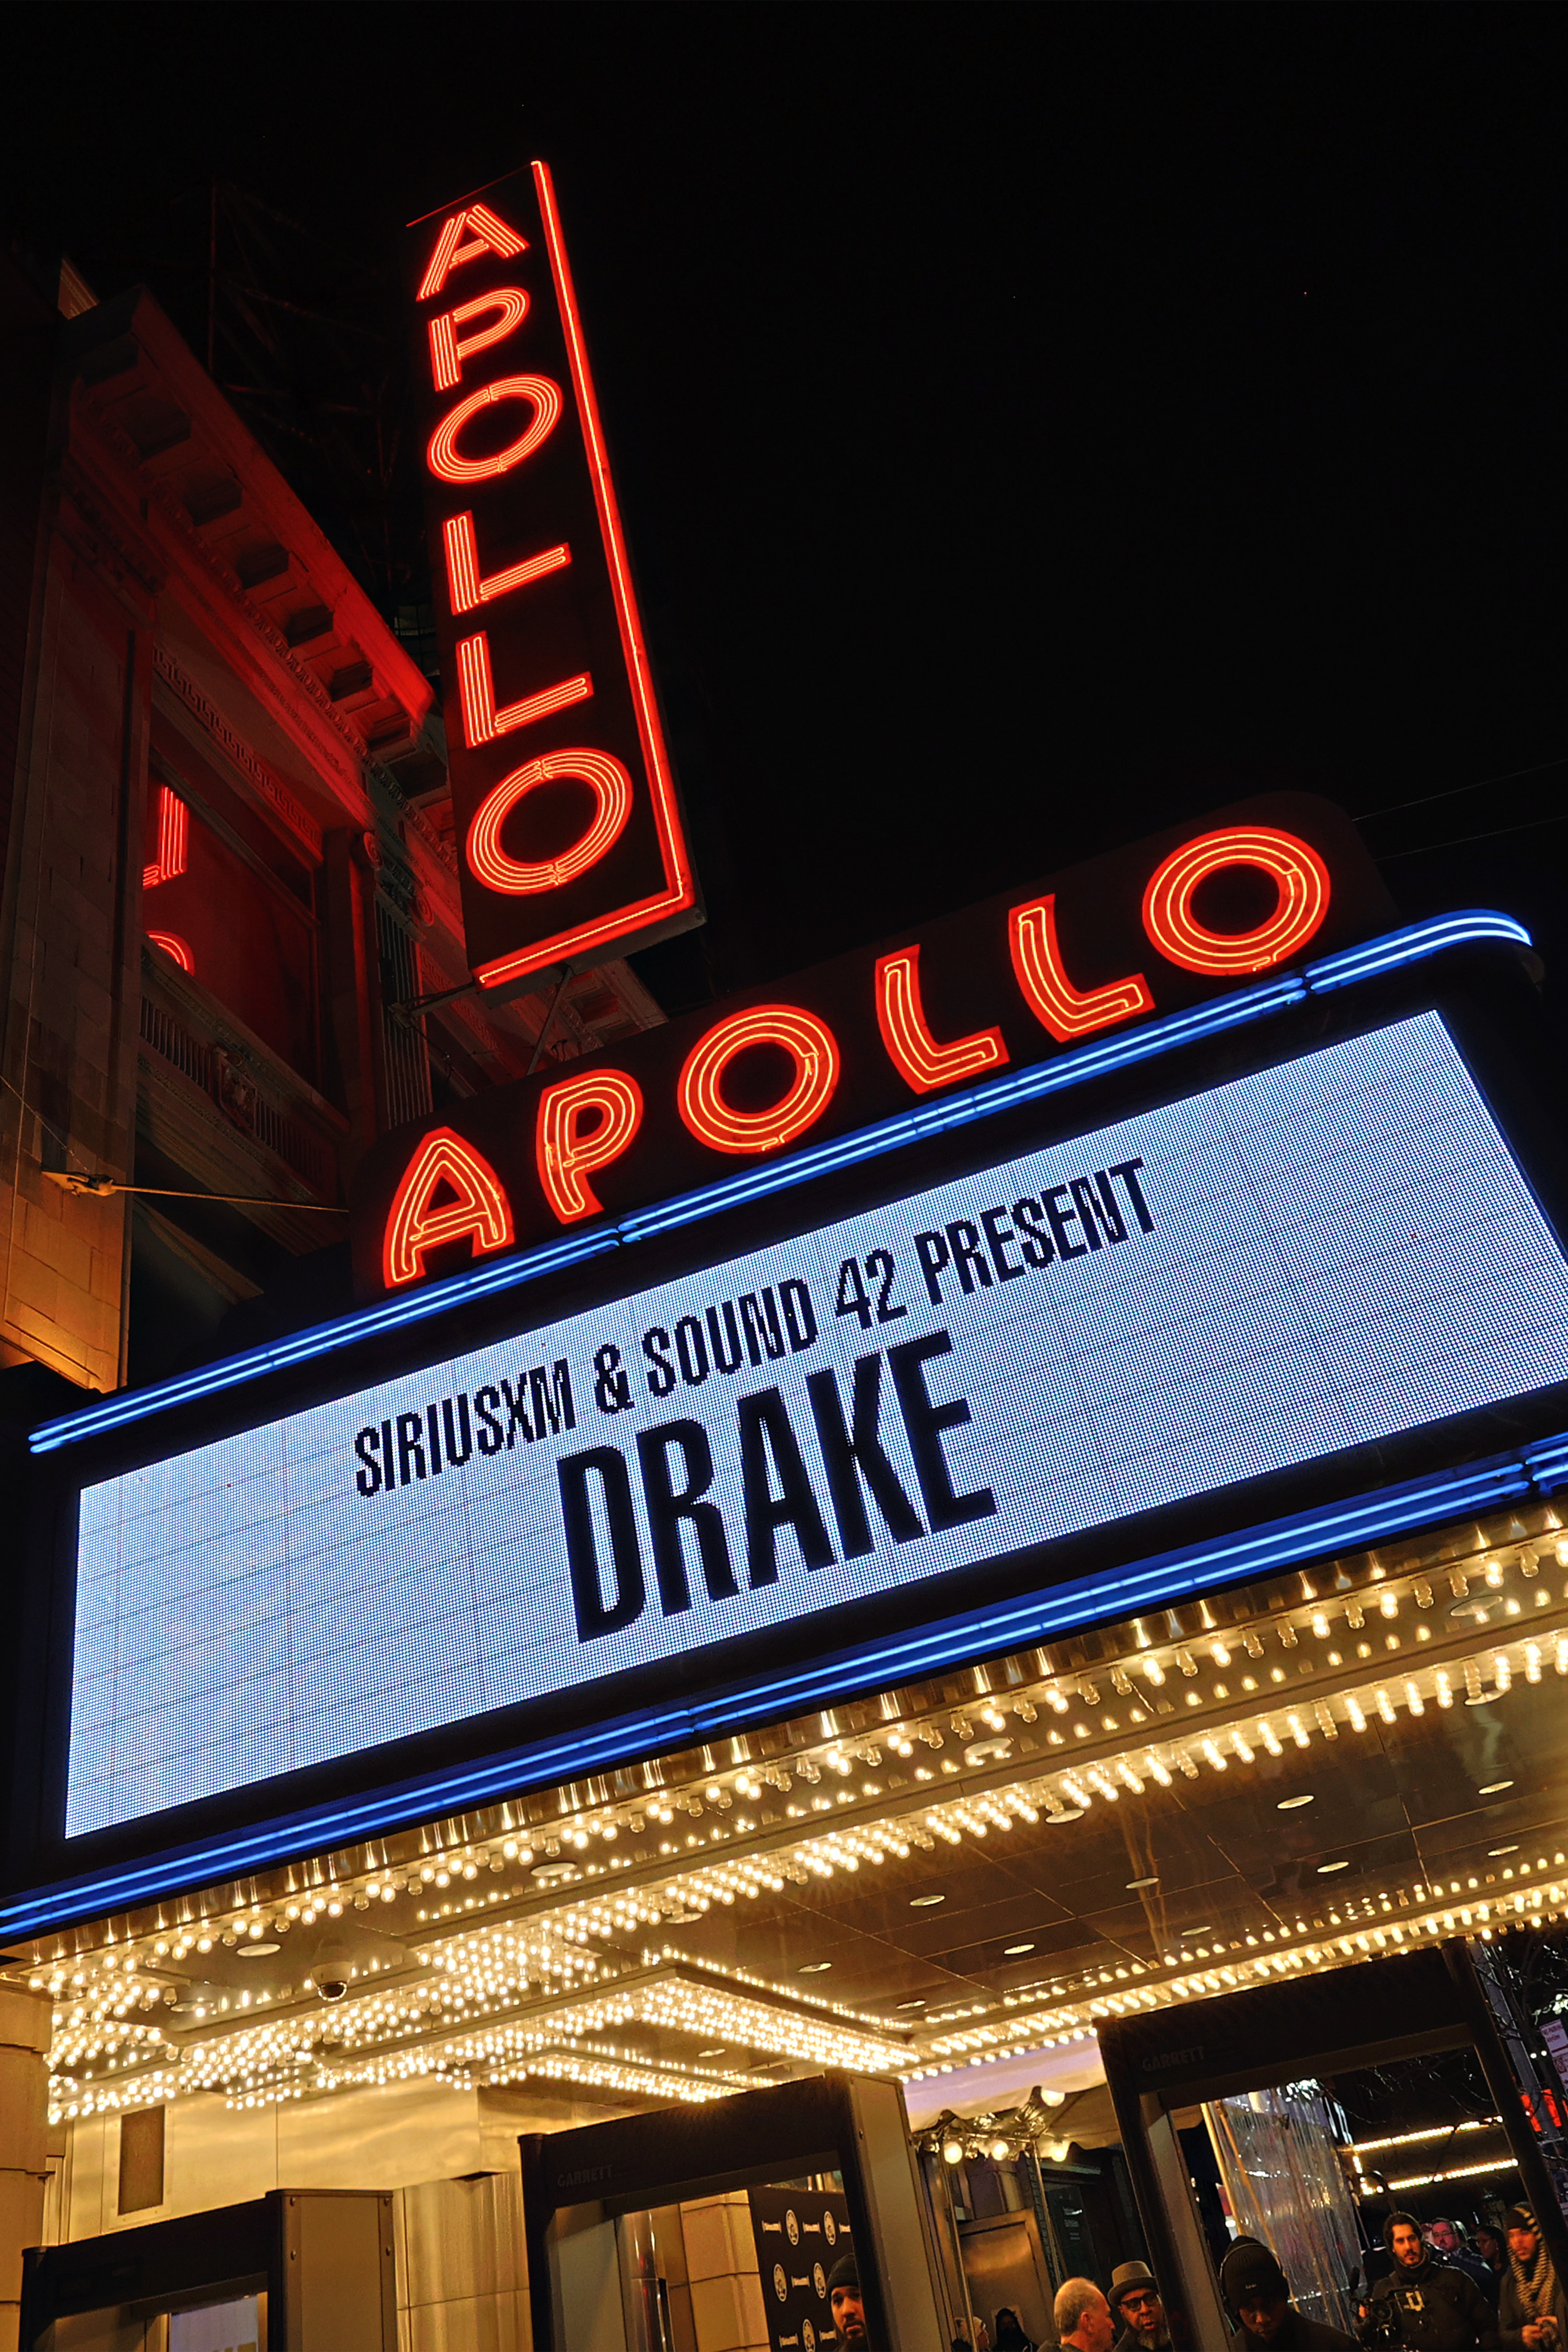 Drakes Apollo Theater Concert Review